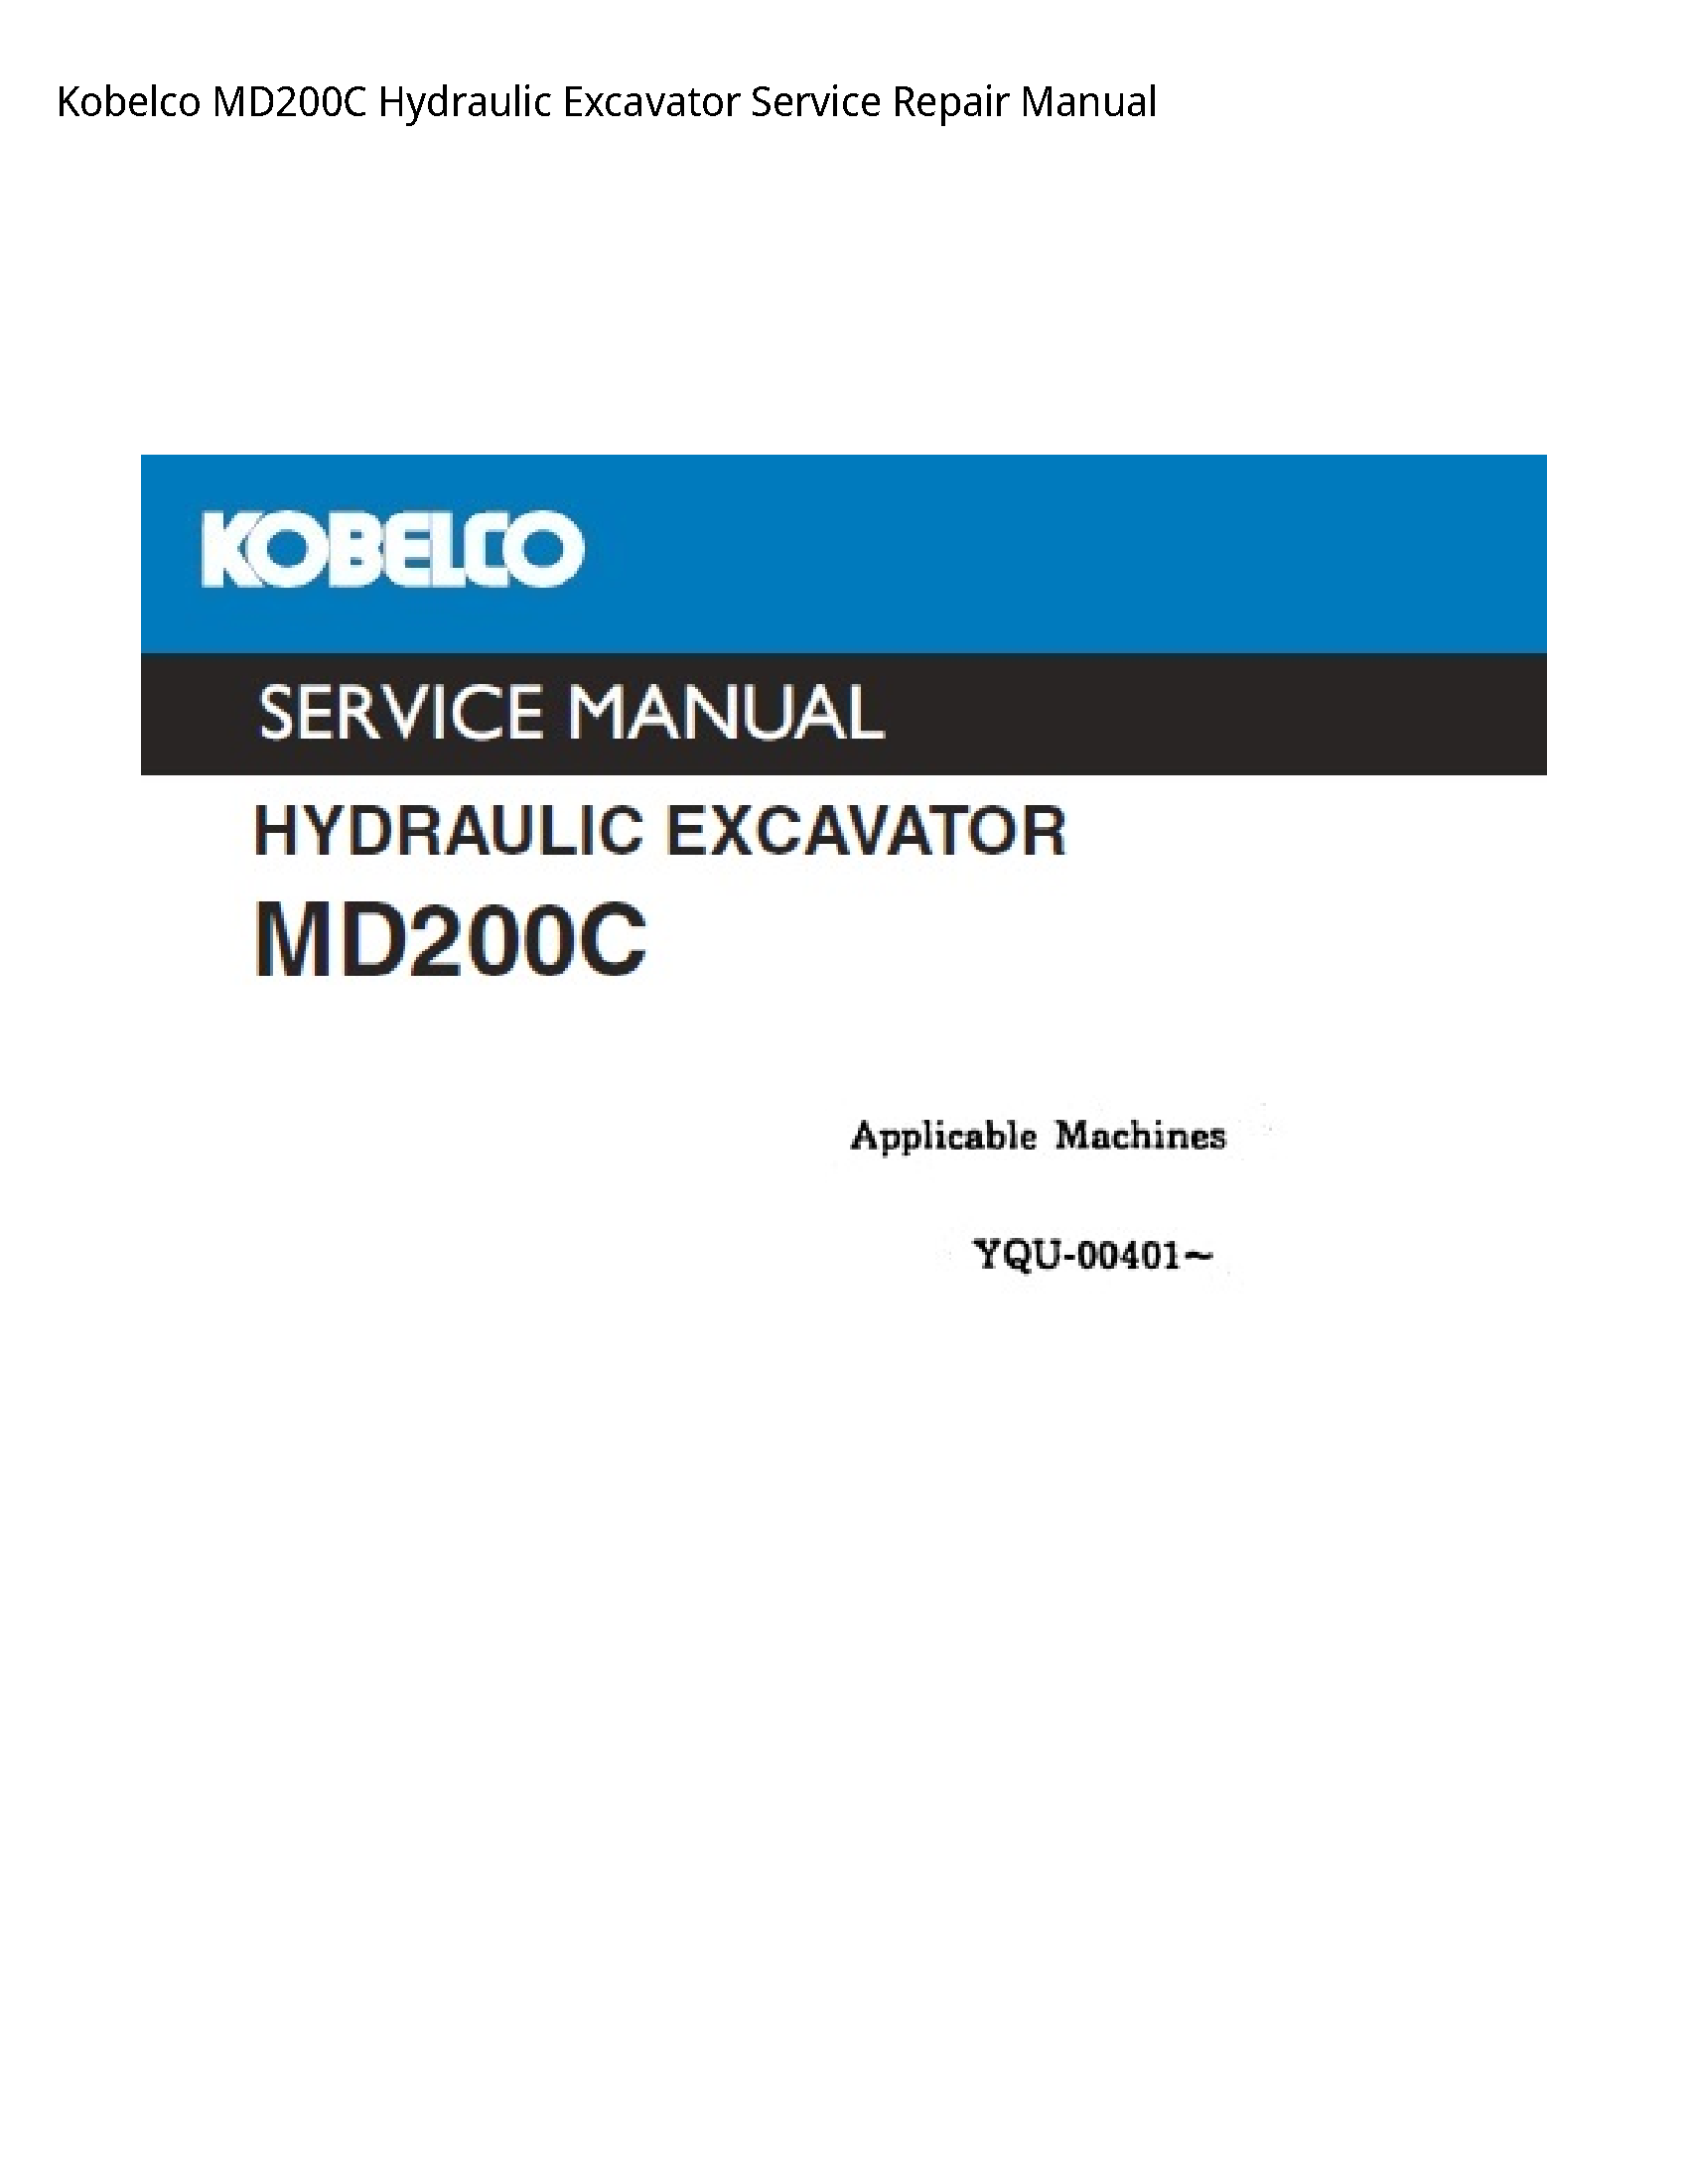 Kobelco MD200C Hydraulic Excavator manual